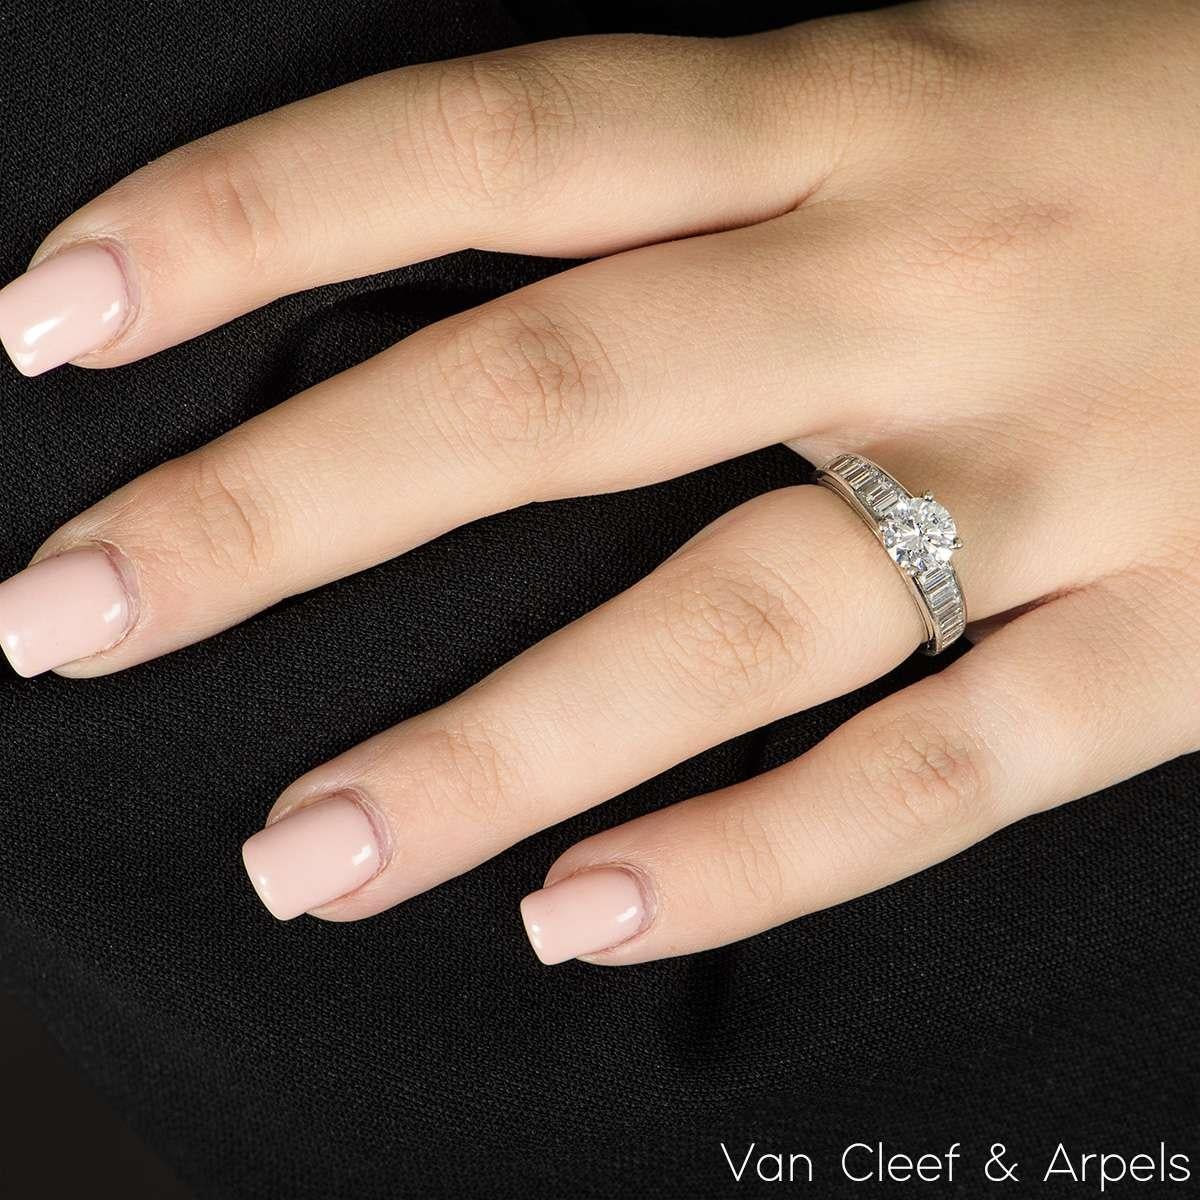 Van Cleef & Arpels Round Brilliant Cut Diamond Engagement Ring 1.03ct IGR Cert In Excellent Condition For Sale In London, GB